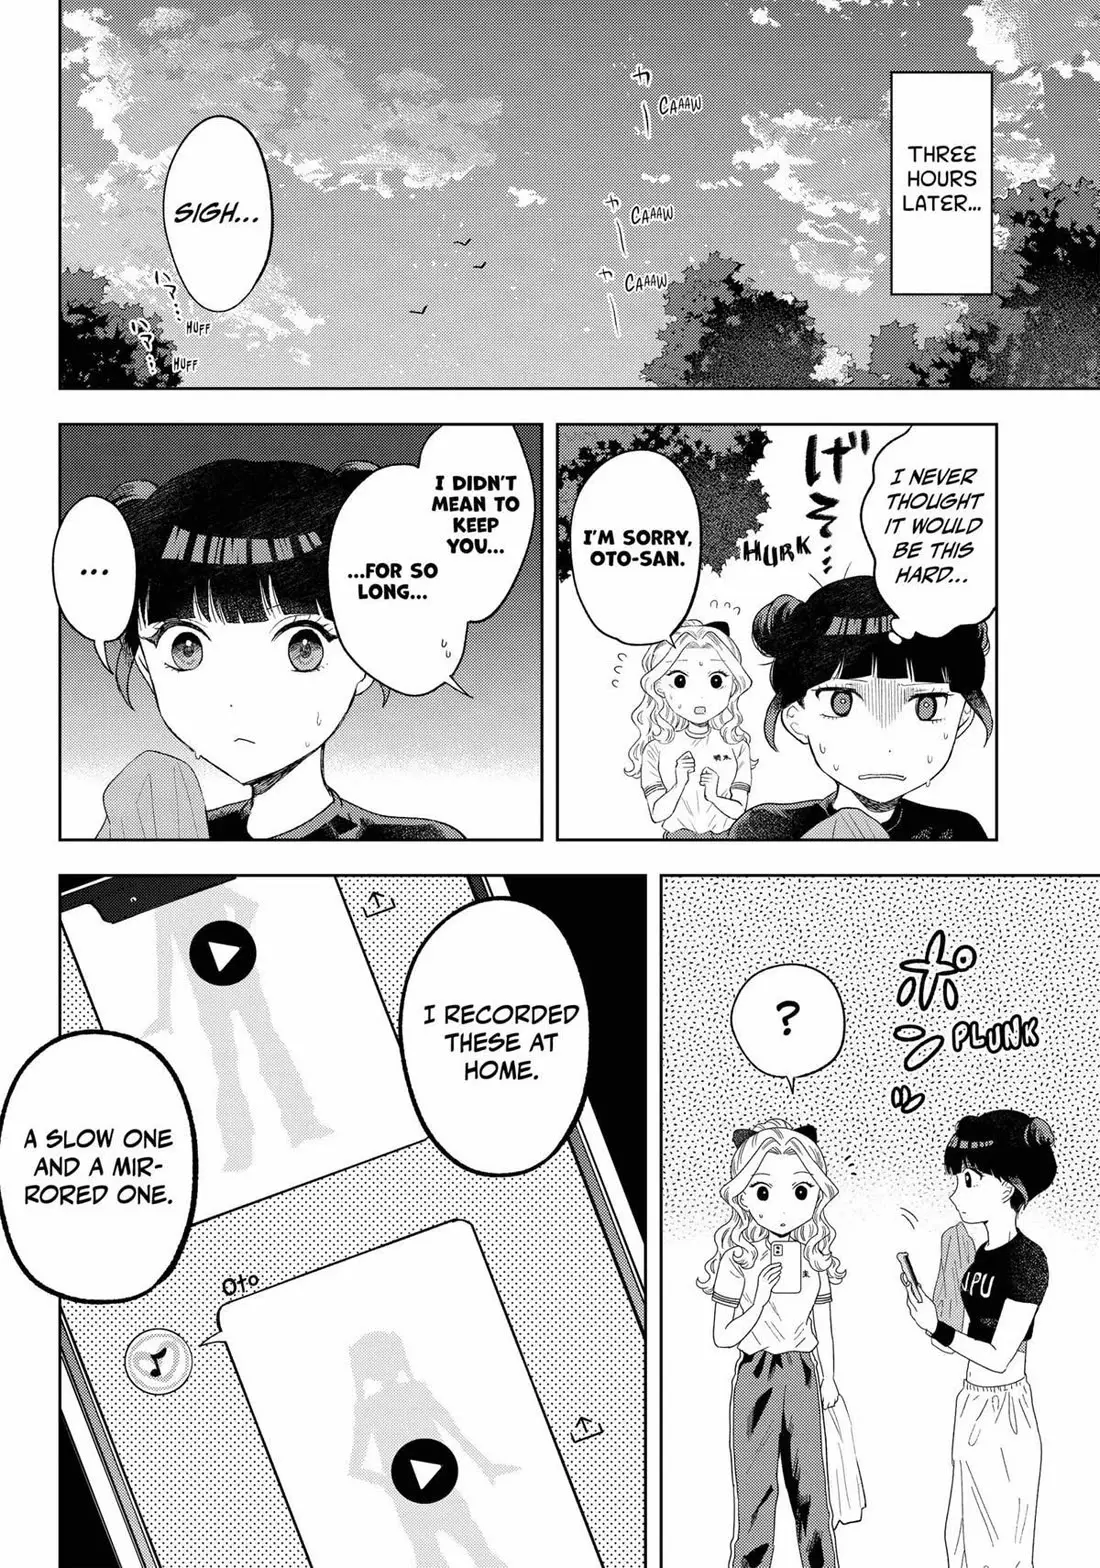 Tsuruko Returns The Favor - 18 page 10-04e01516